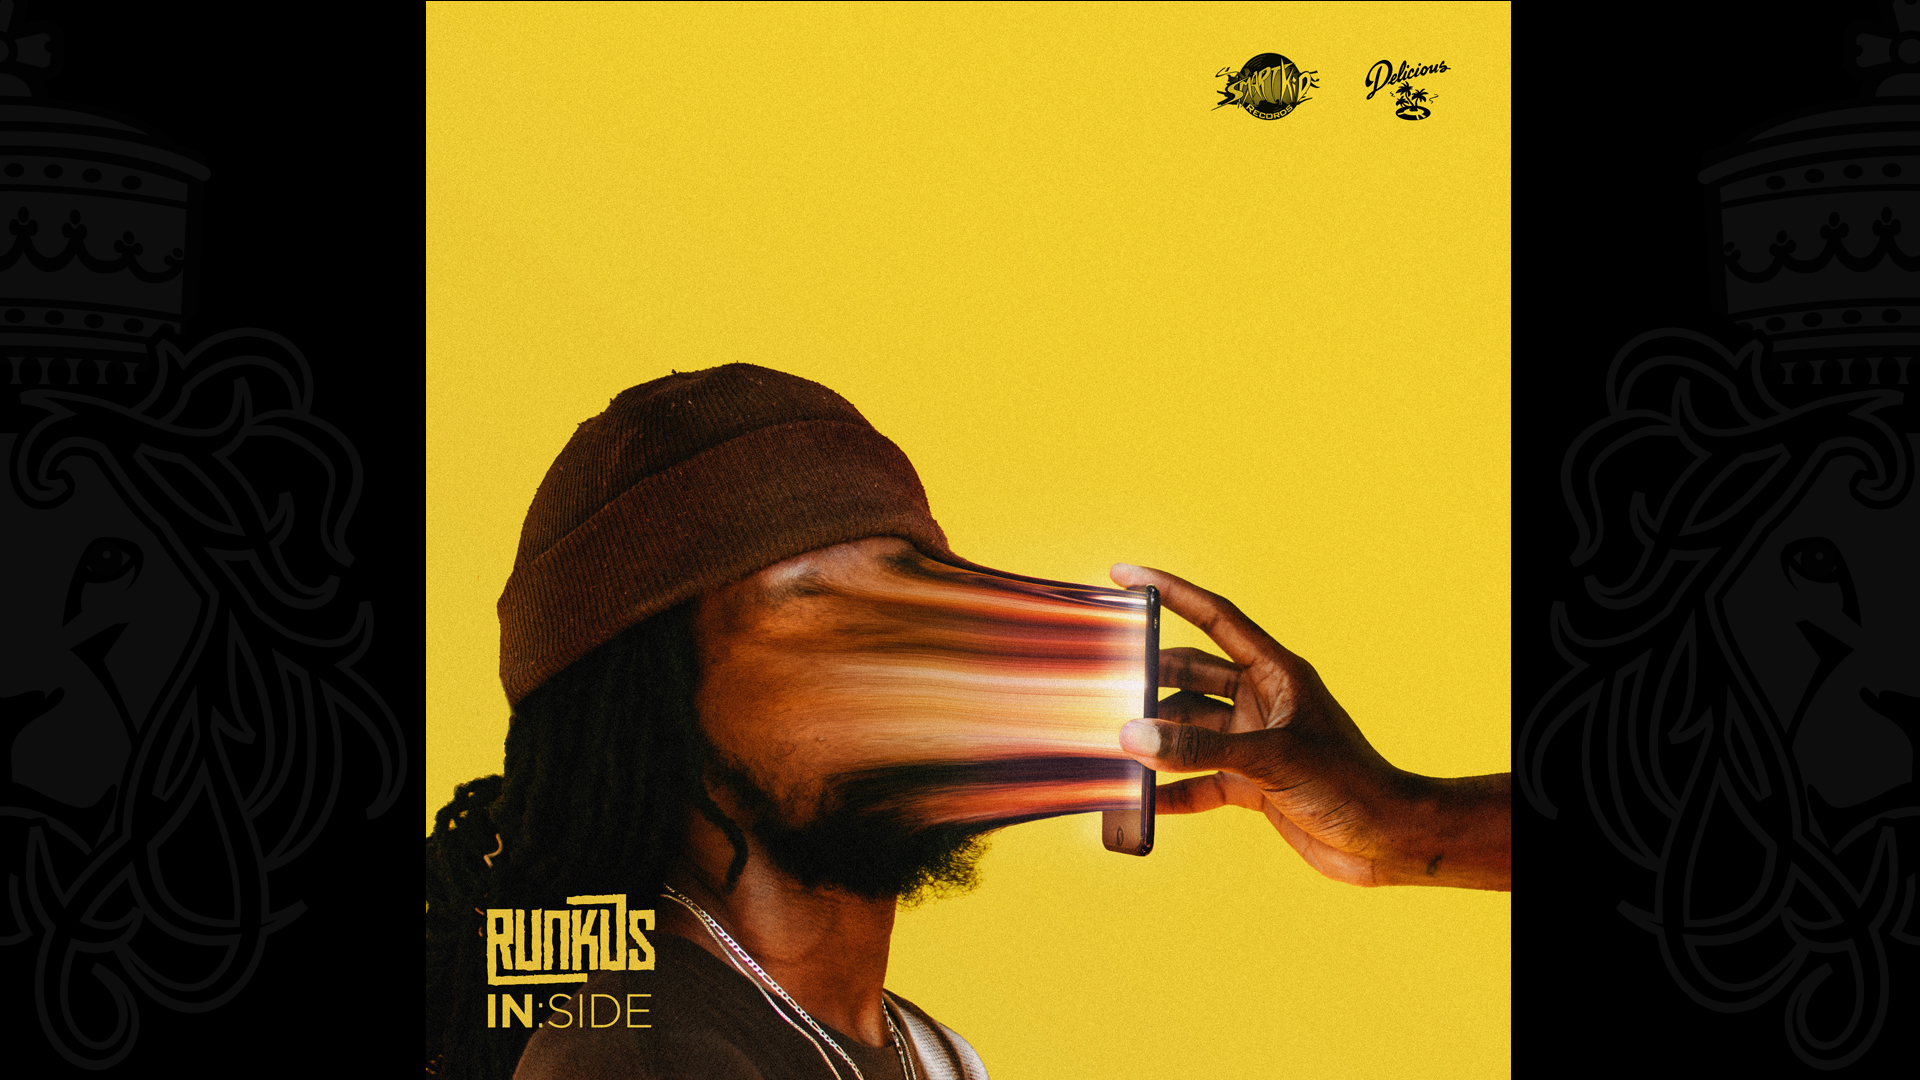 Runkus releases 10 Track IN:SIDE LP